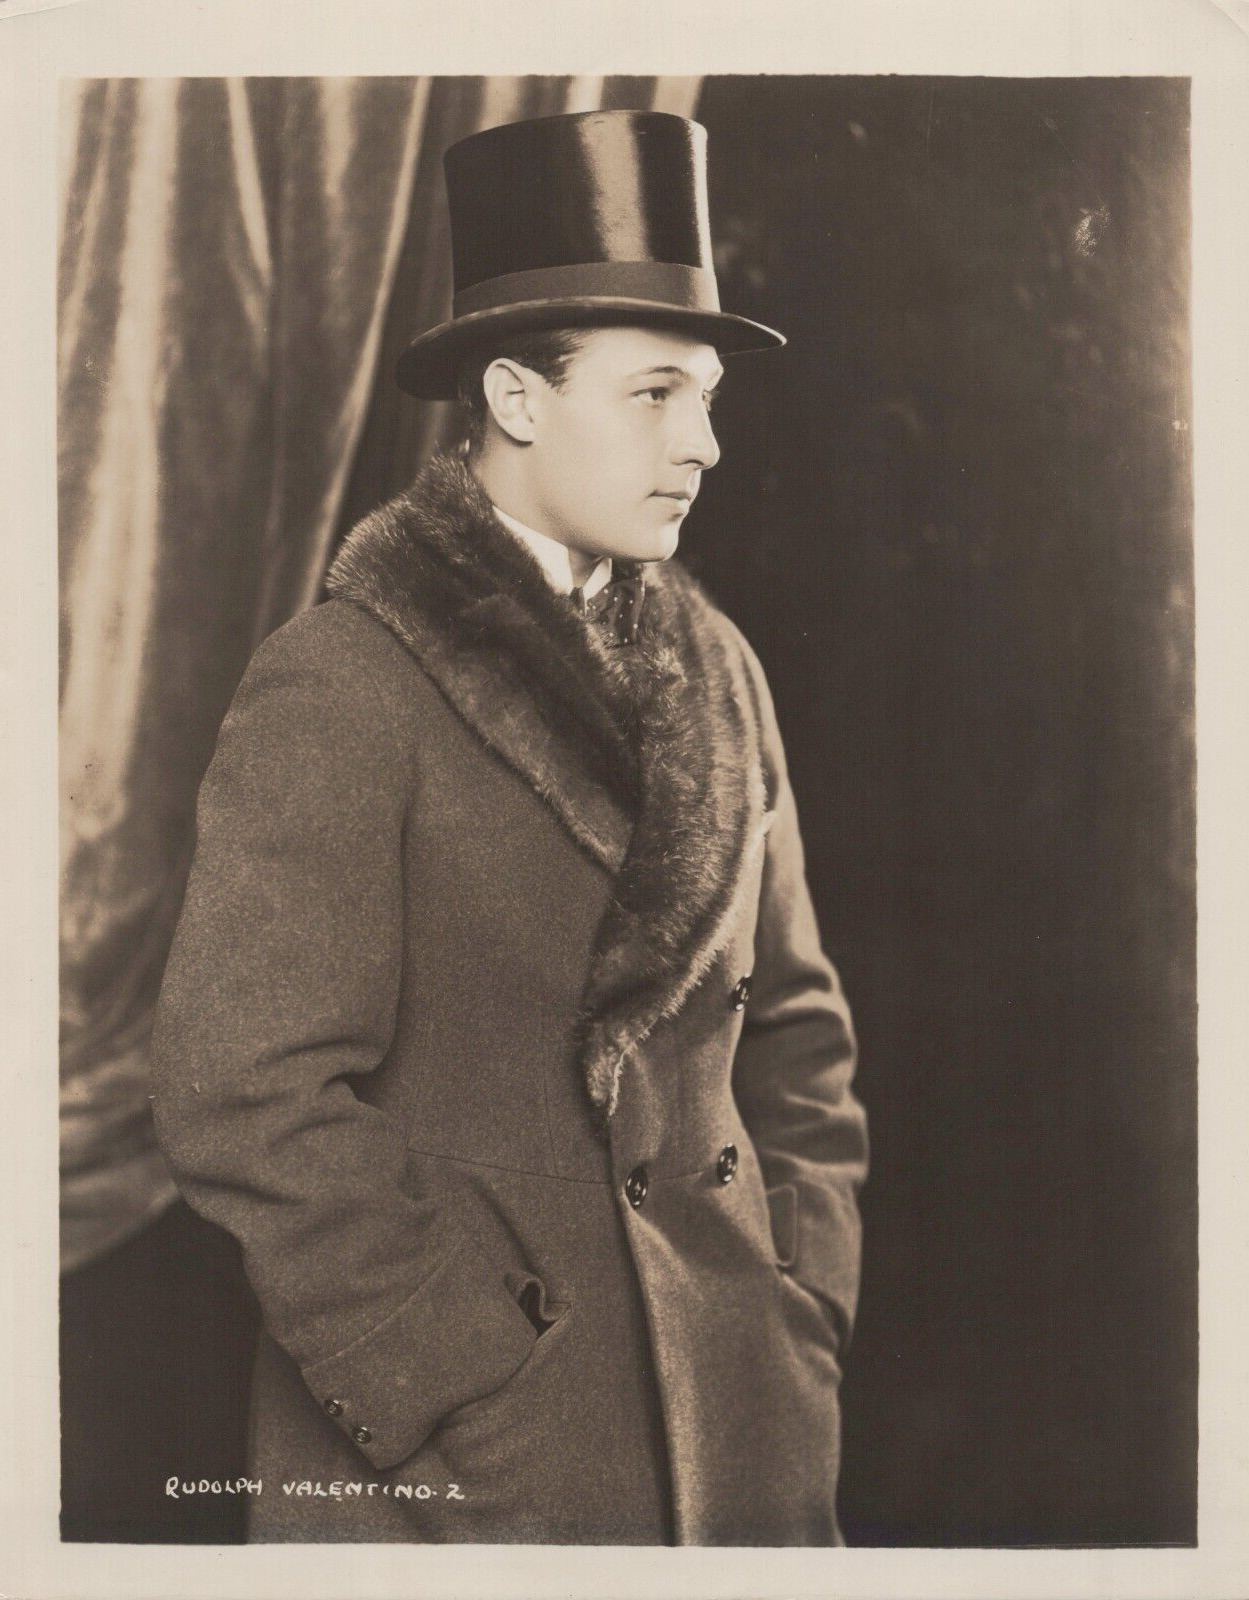 HOLLYWOOD GAY INTEREST Rudolph Valentino HANDSOME PORTRAIT 1940s Photo C23